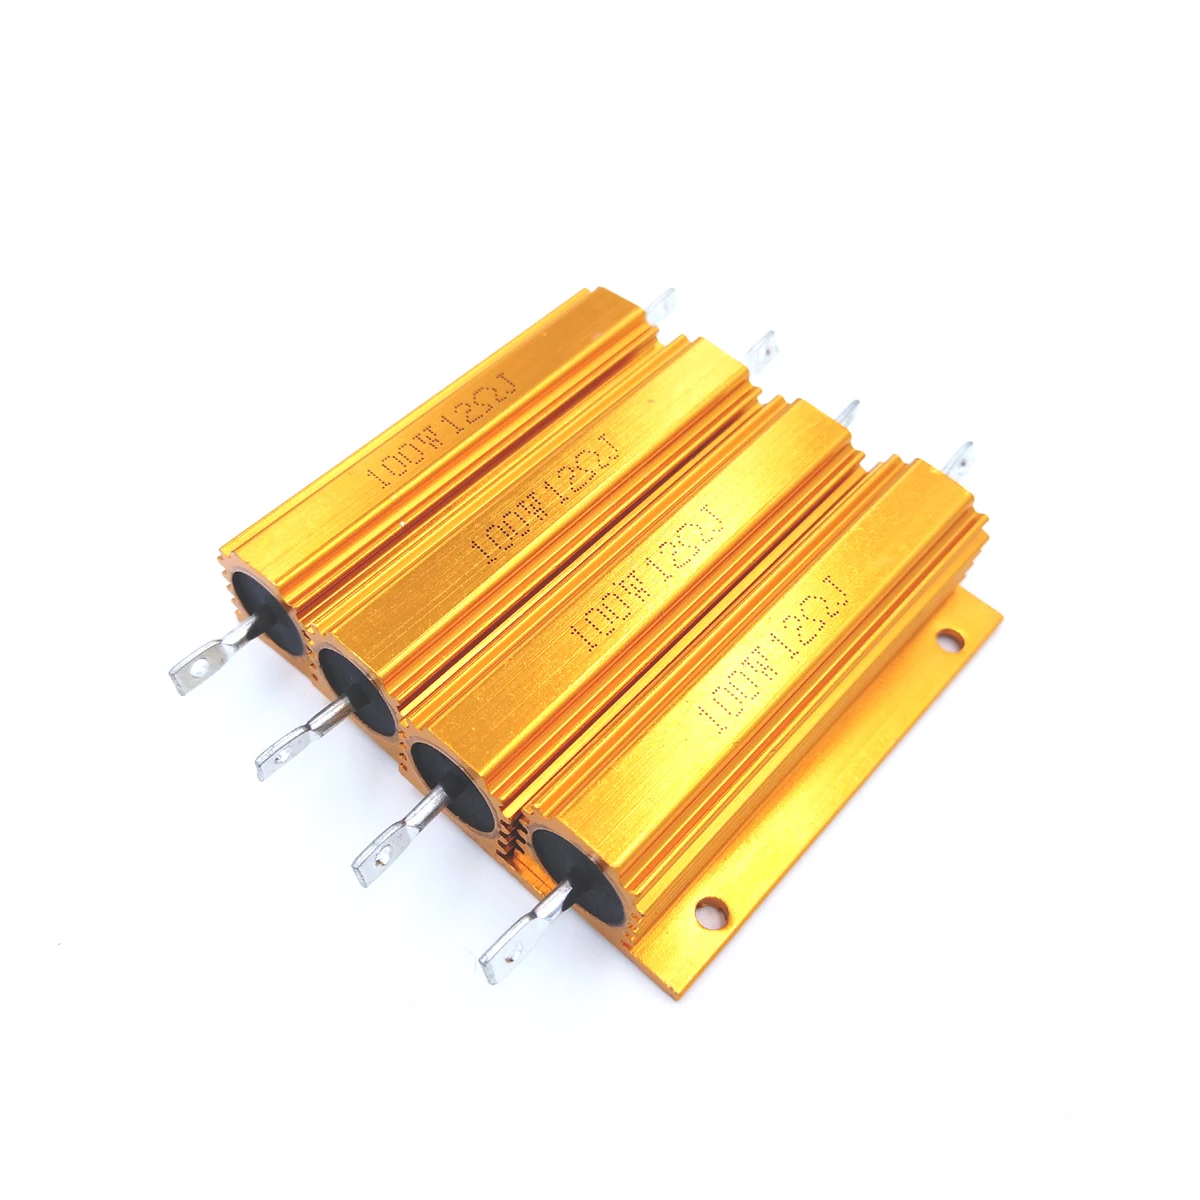 

400R 400ohm 400 230R 230ohm 230 R Ohm 100W Watt Aluminum Wirewound Power Metal Shell Case Resistor Resistance RX24